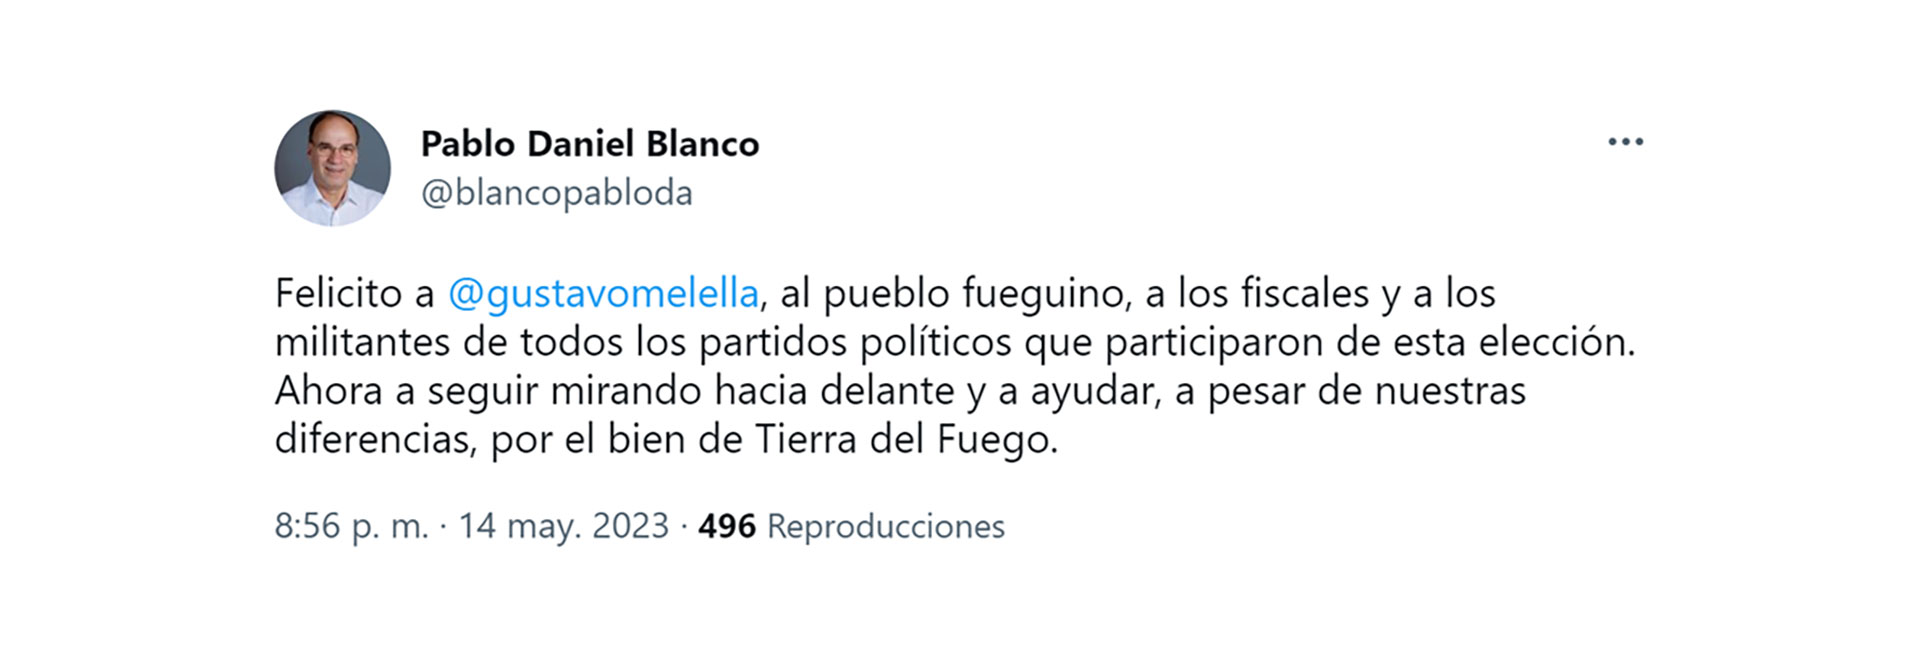 Pablo Daniel Blanco's tweet awaiting provisional scrutiny. 